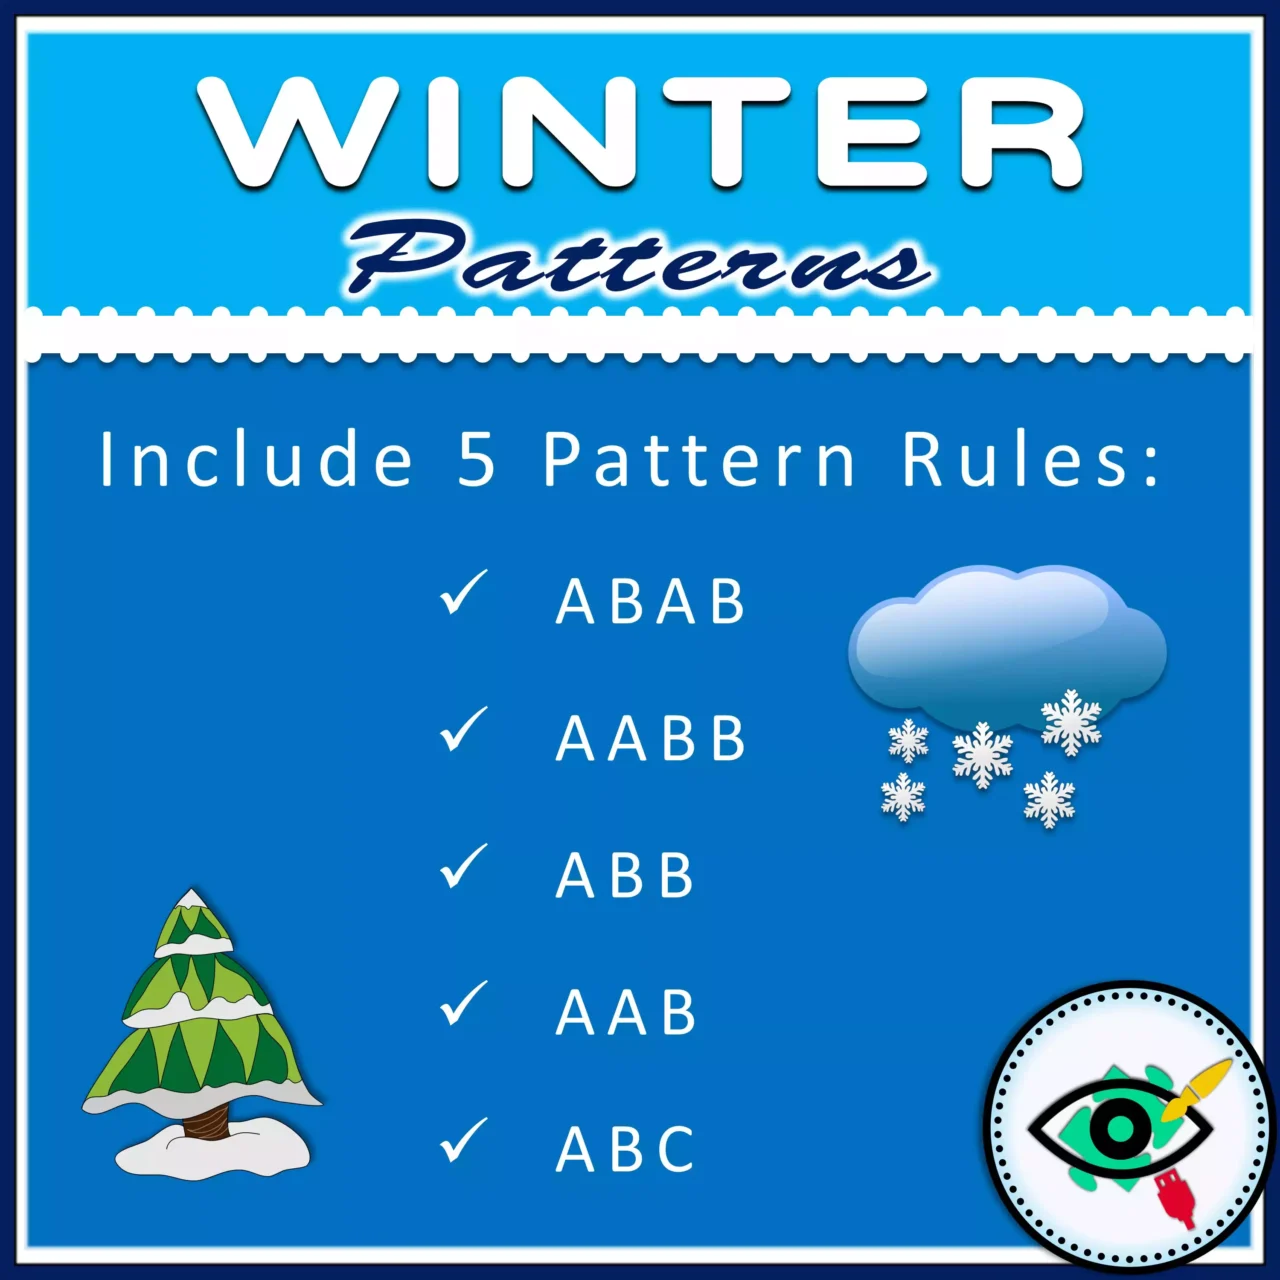 Winter - Patterns Activity - Image Title 1